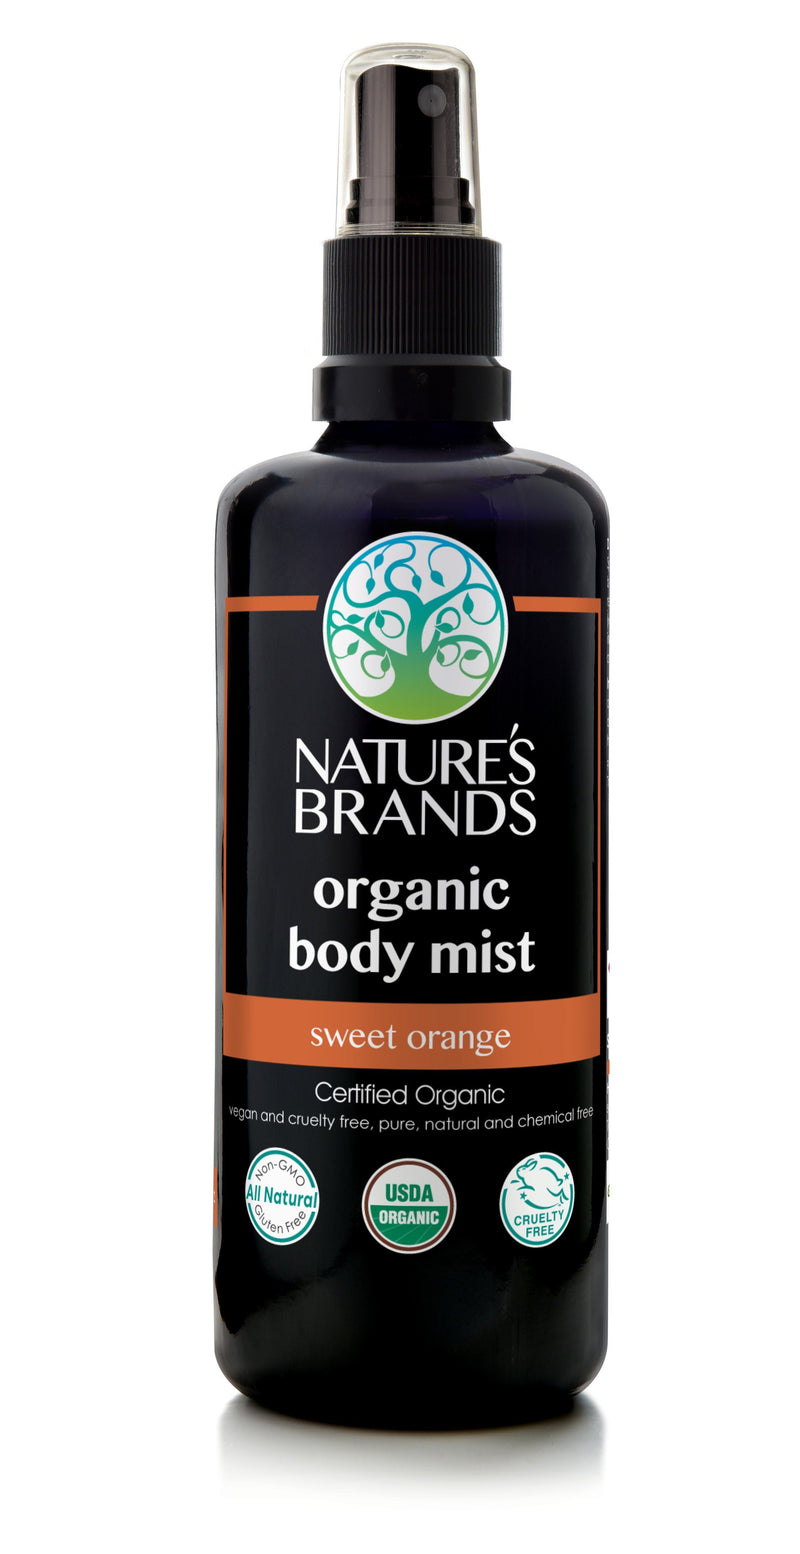 Herbal Choice Mari Organic Body Mist - Herbal Choice Mari Organic Body Mist - 3.4floz